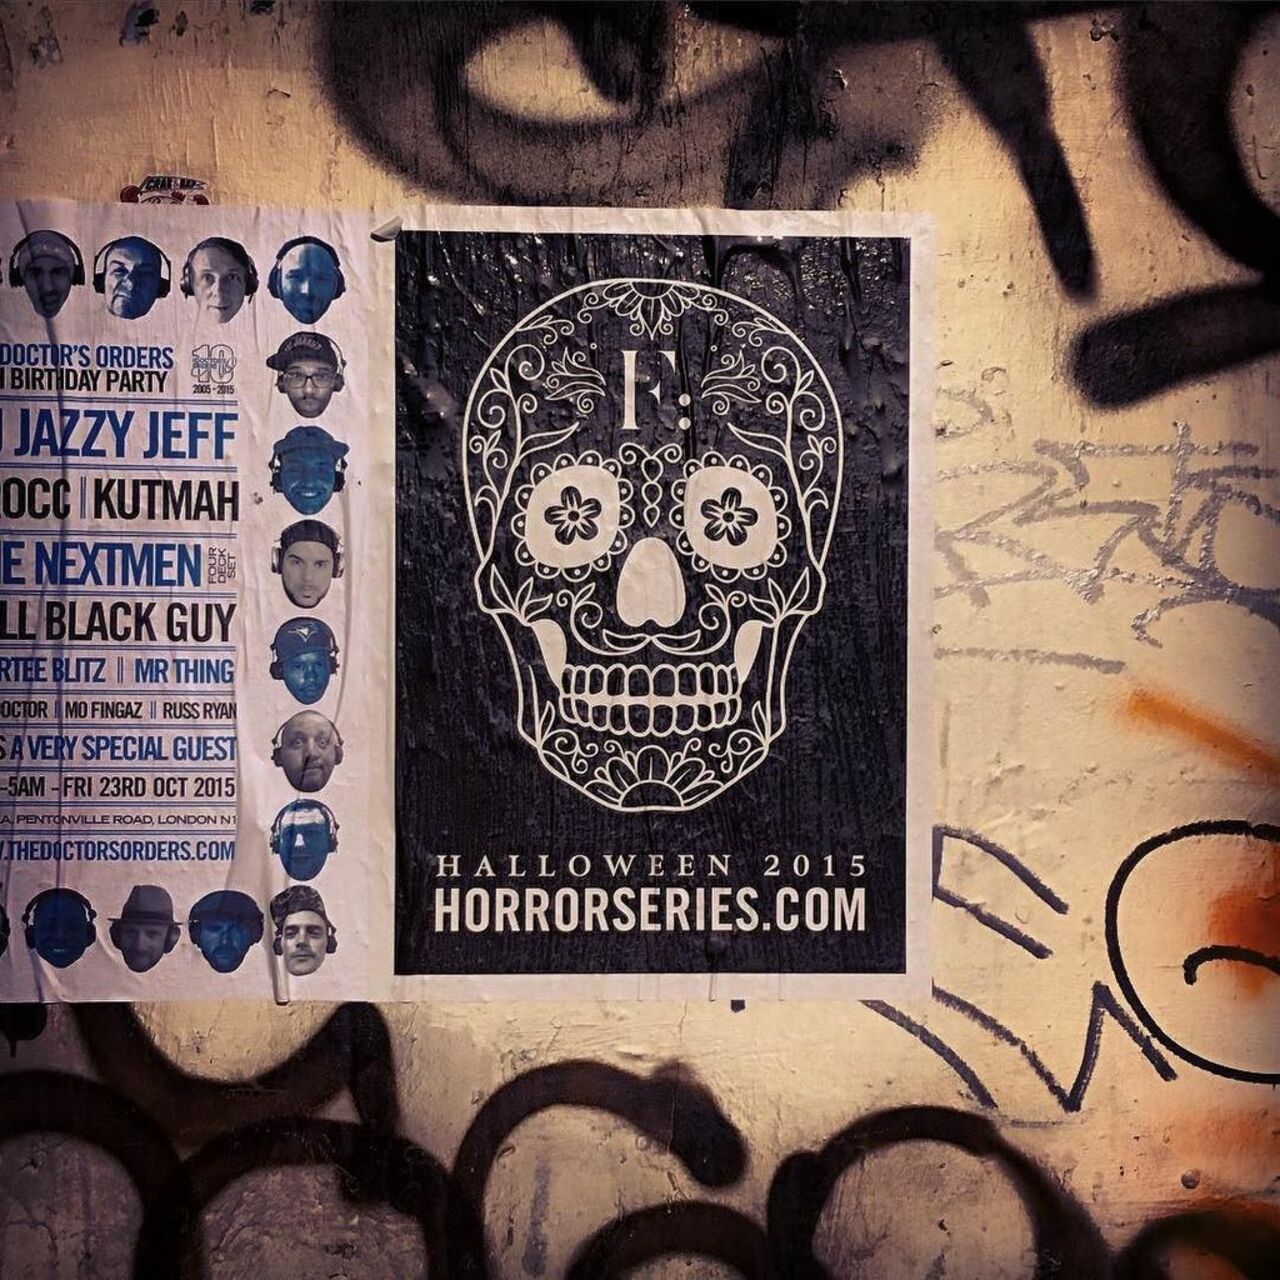 Somewhere in #Soho. #uk #london #soho #wall #poster #art #skull #halloween #blackandwhite #streetart #graffiti https://t.co/nX9bQE5zBU